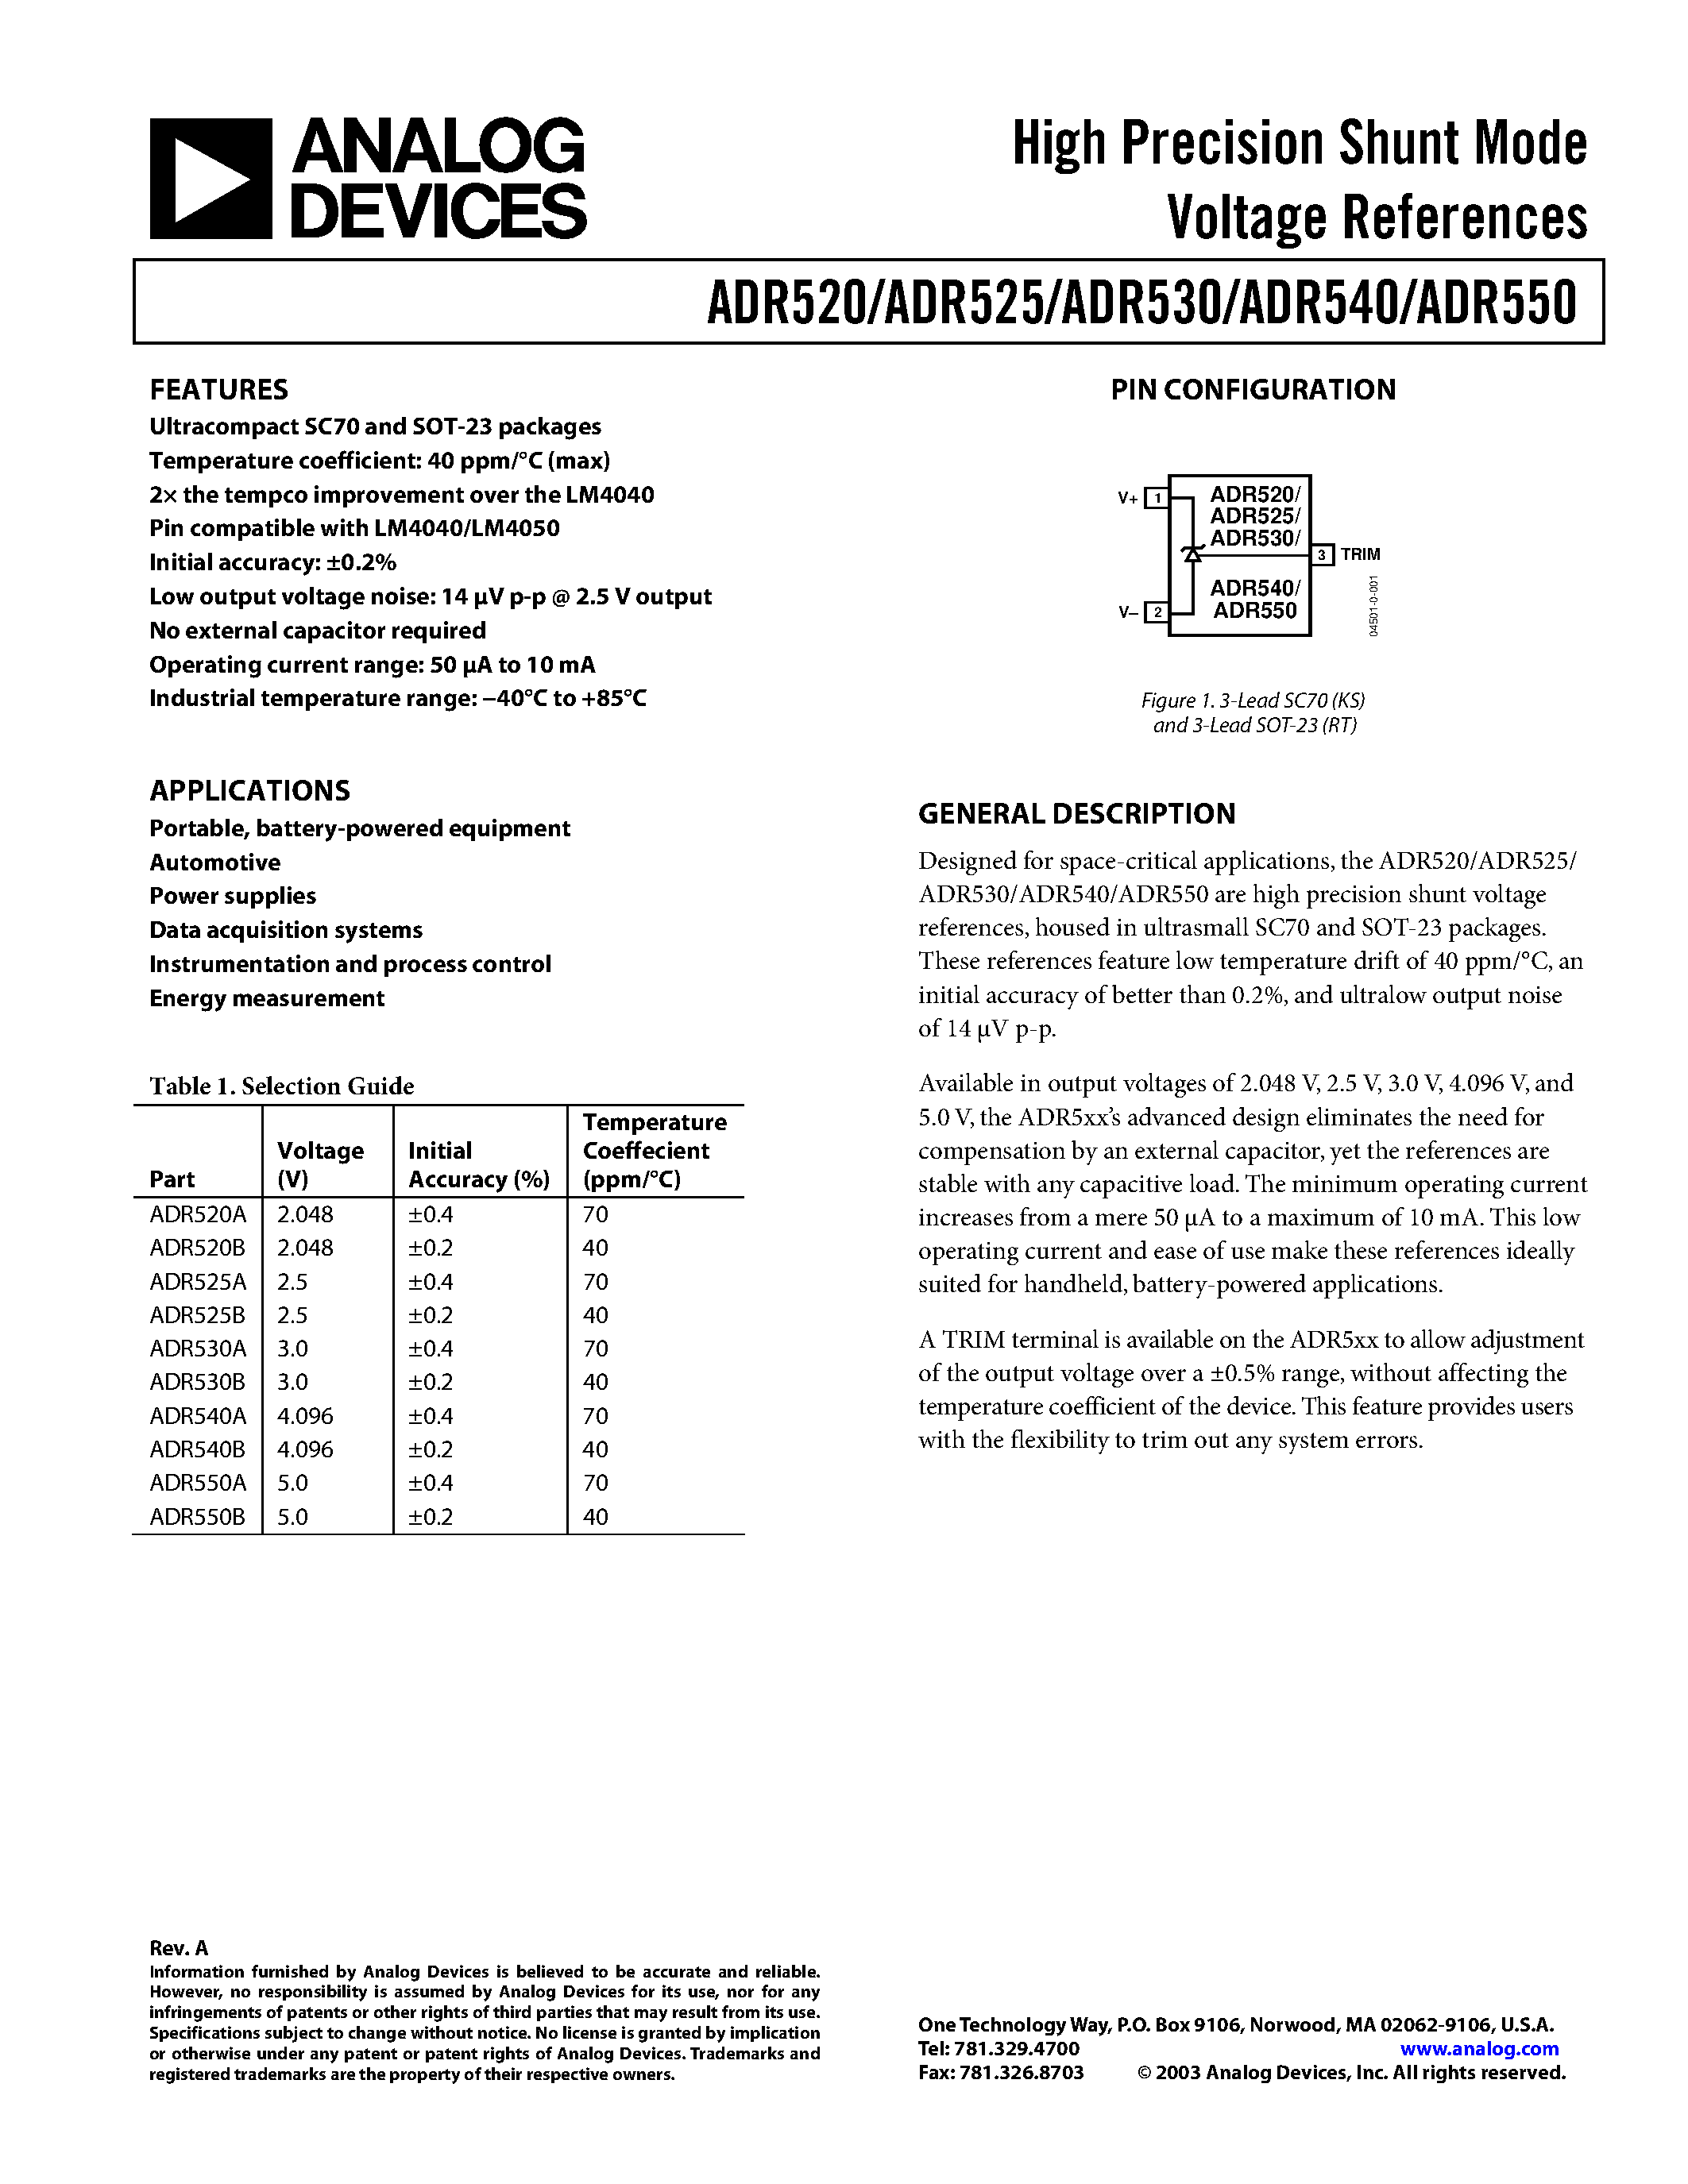 Даташит ADR550BRT-R2 - High Precision Shunt Mode Voltage References страница 1